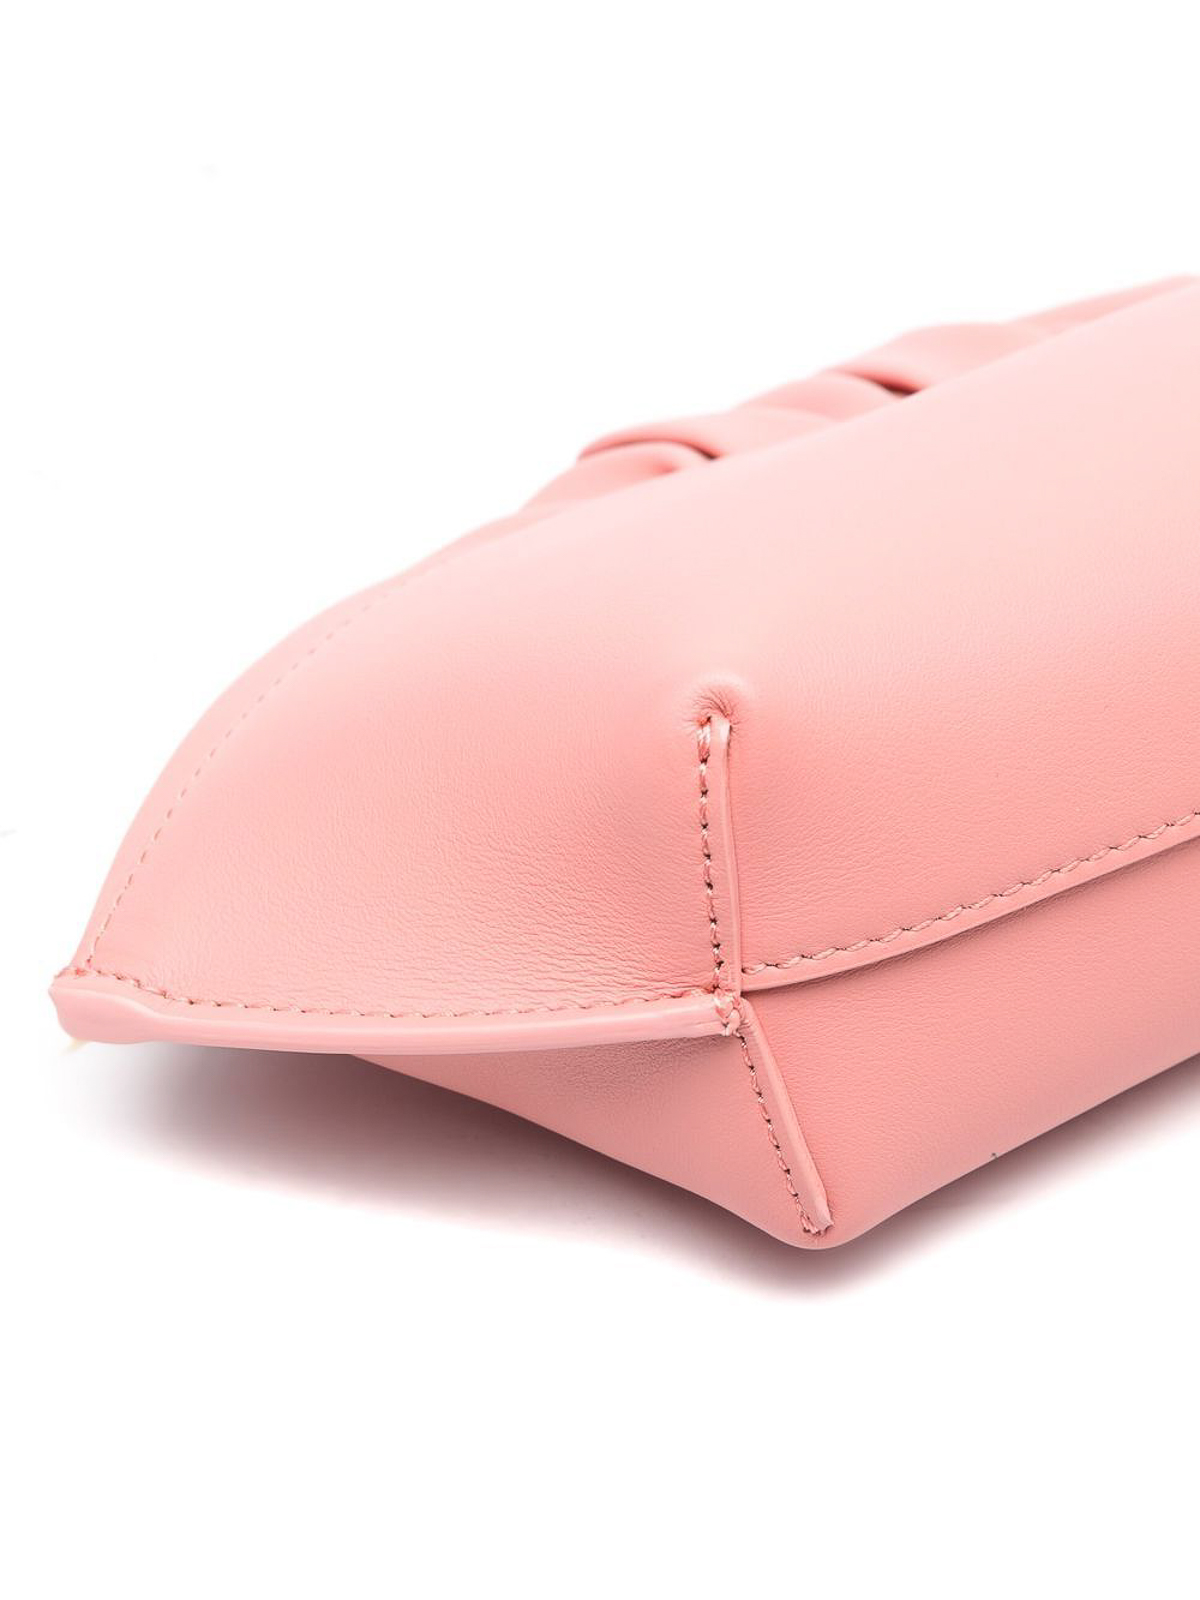 Shop Ree Projects Ann Baguette Leather Handbag In Color Carne Y Neutral